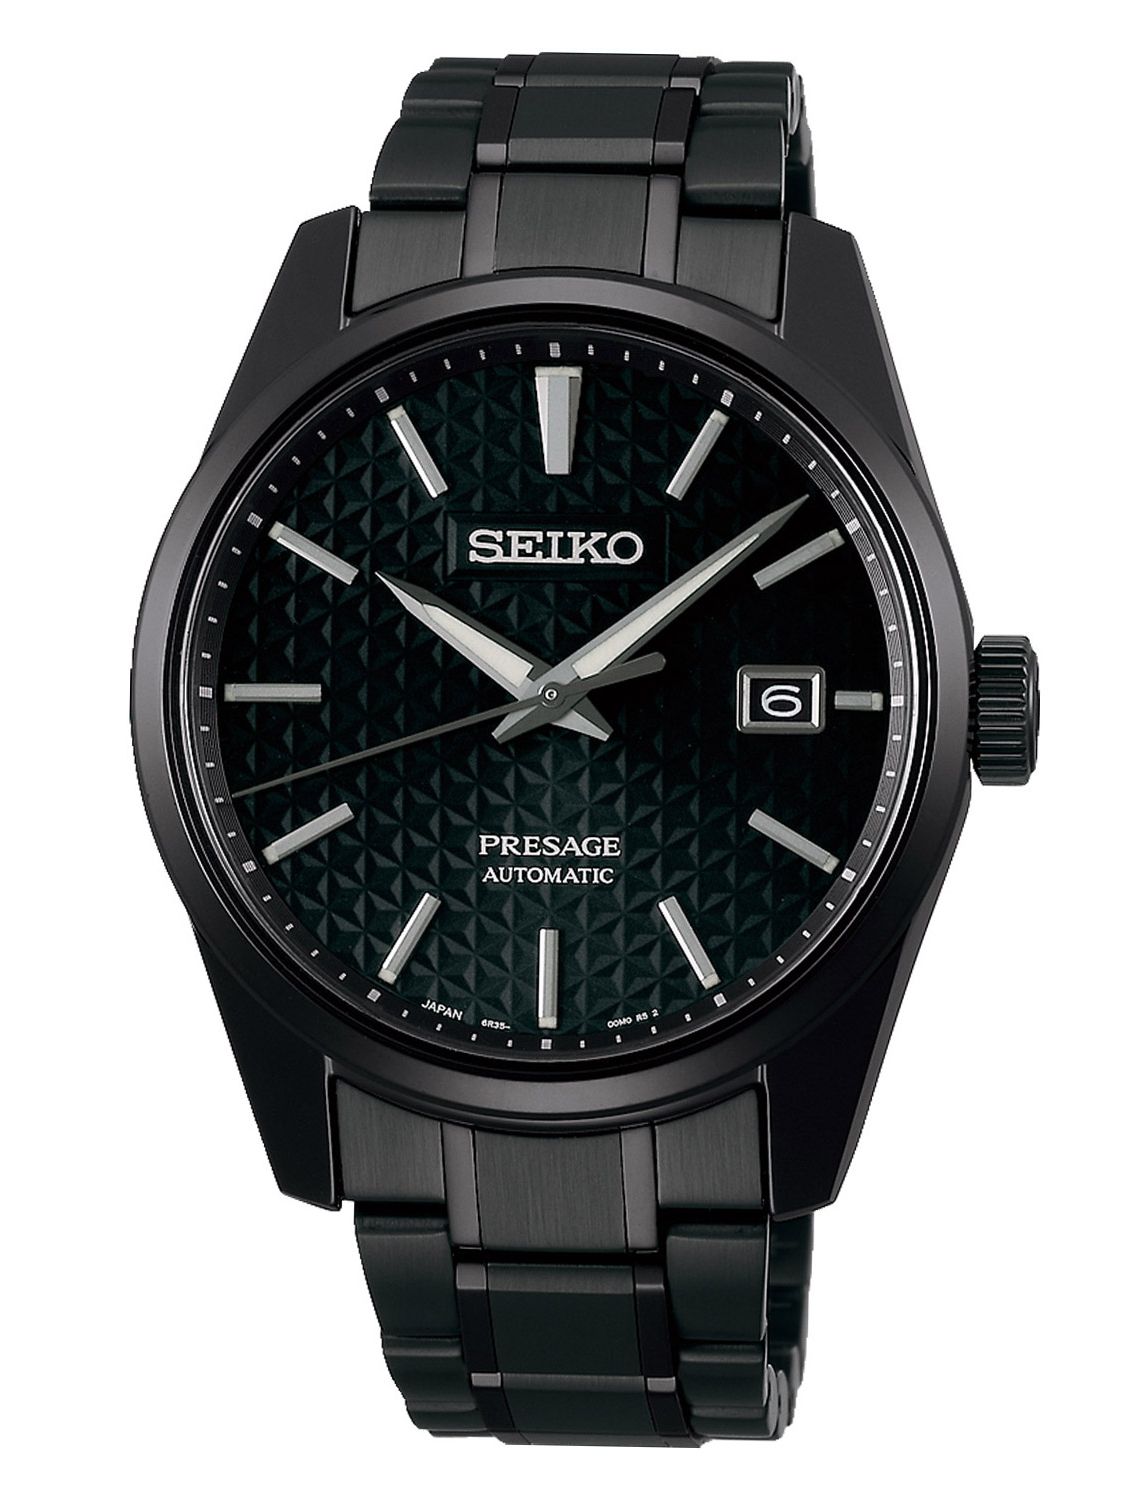 SEIKO SPB229J1 Presage Men's Automatic Watch Black